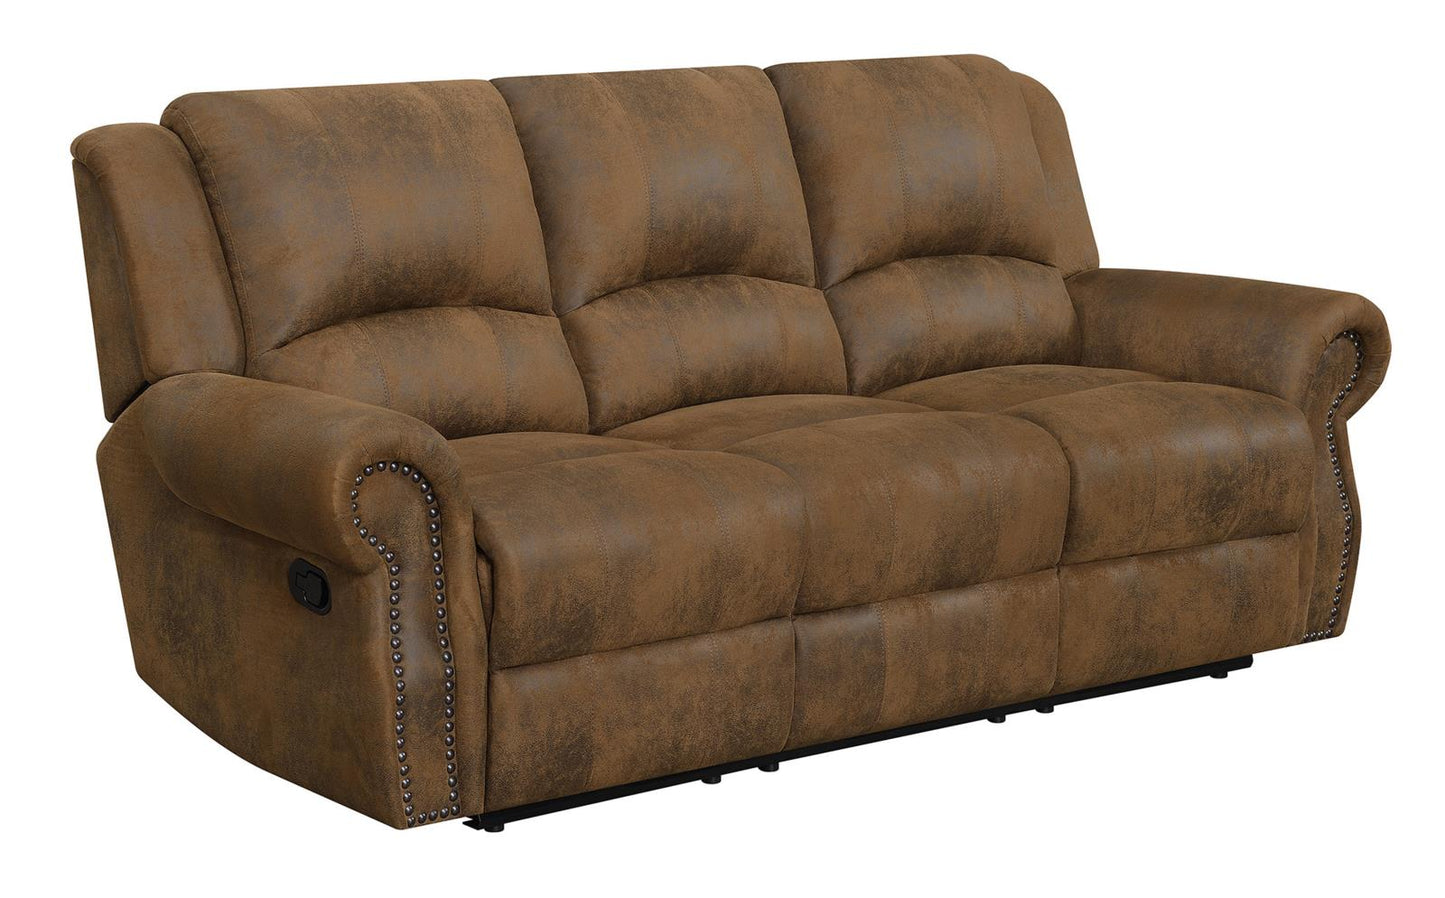 Sir Rawlinson - Sir Rawlinson Upholstered Living Room Set Buckskin Brown